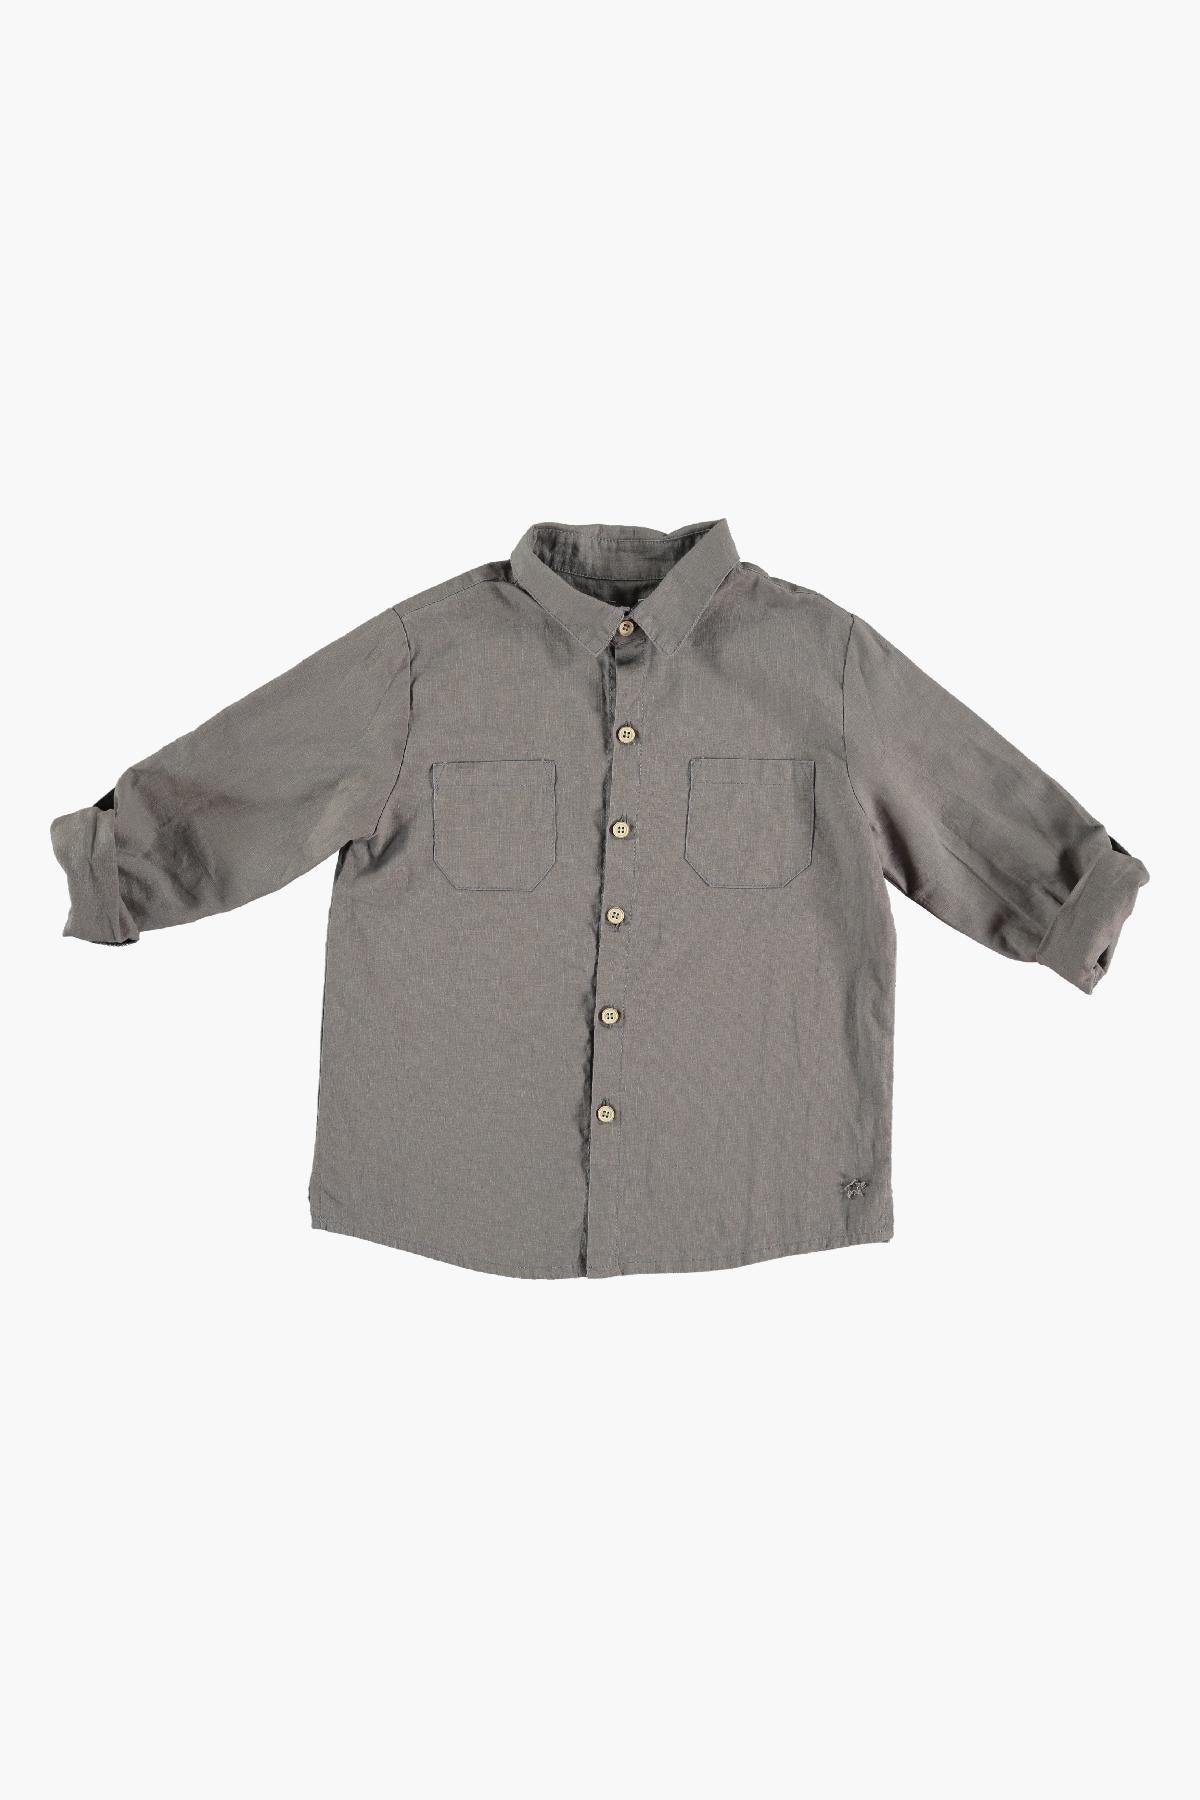 Tocoto Vintage Cotton Linen Boys Shirt - Grey – Mini Ruby